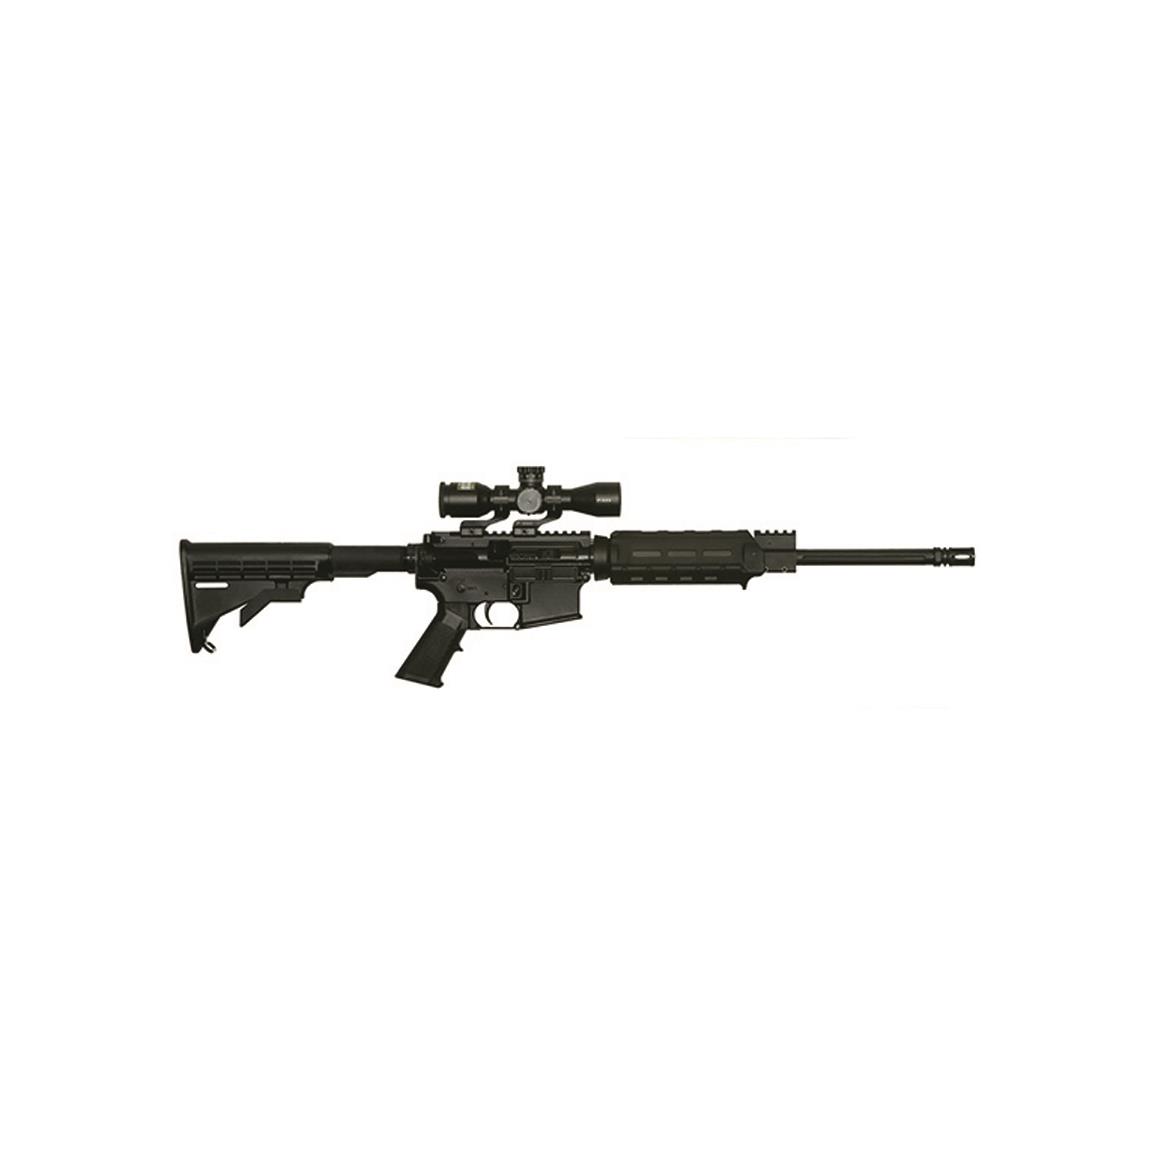 APF Econo Carbine AR-15, Semi-Automatic, 300 BLK, Nikon P-223 3X Scope, 30+1 Rounds